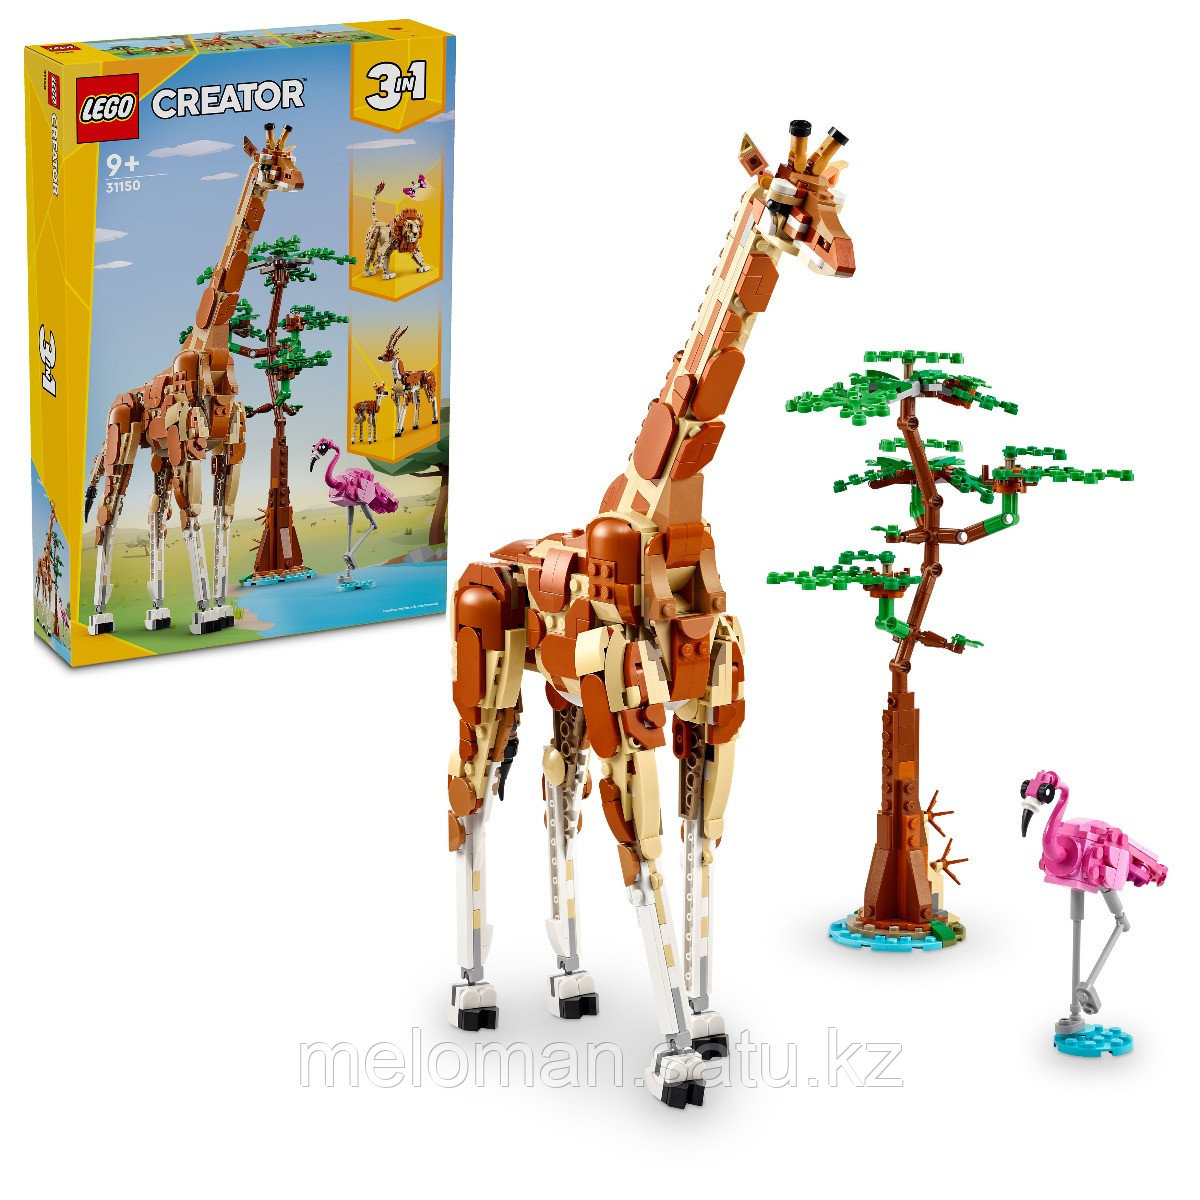 LEGO: Сафари с животными Creator 31150